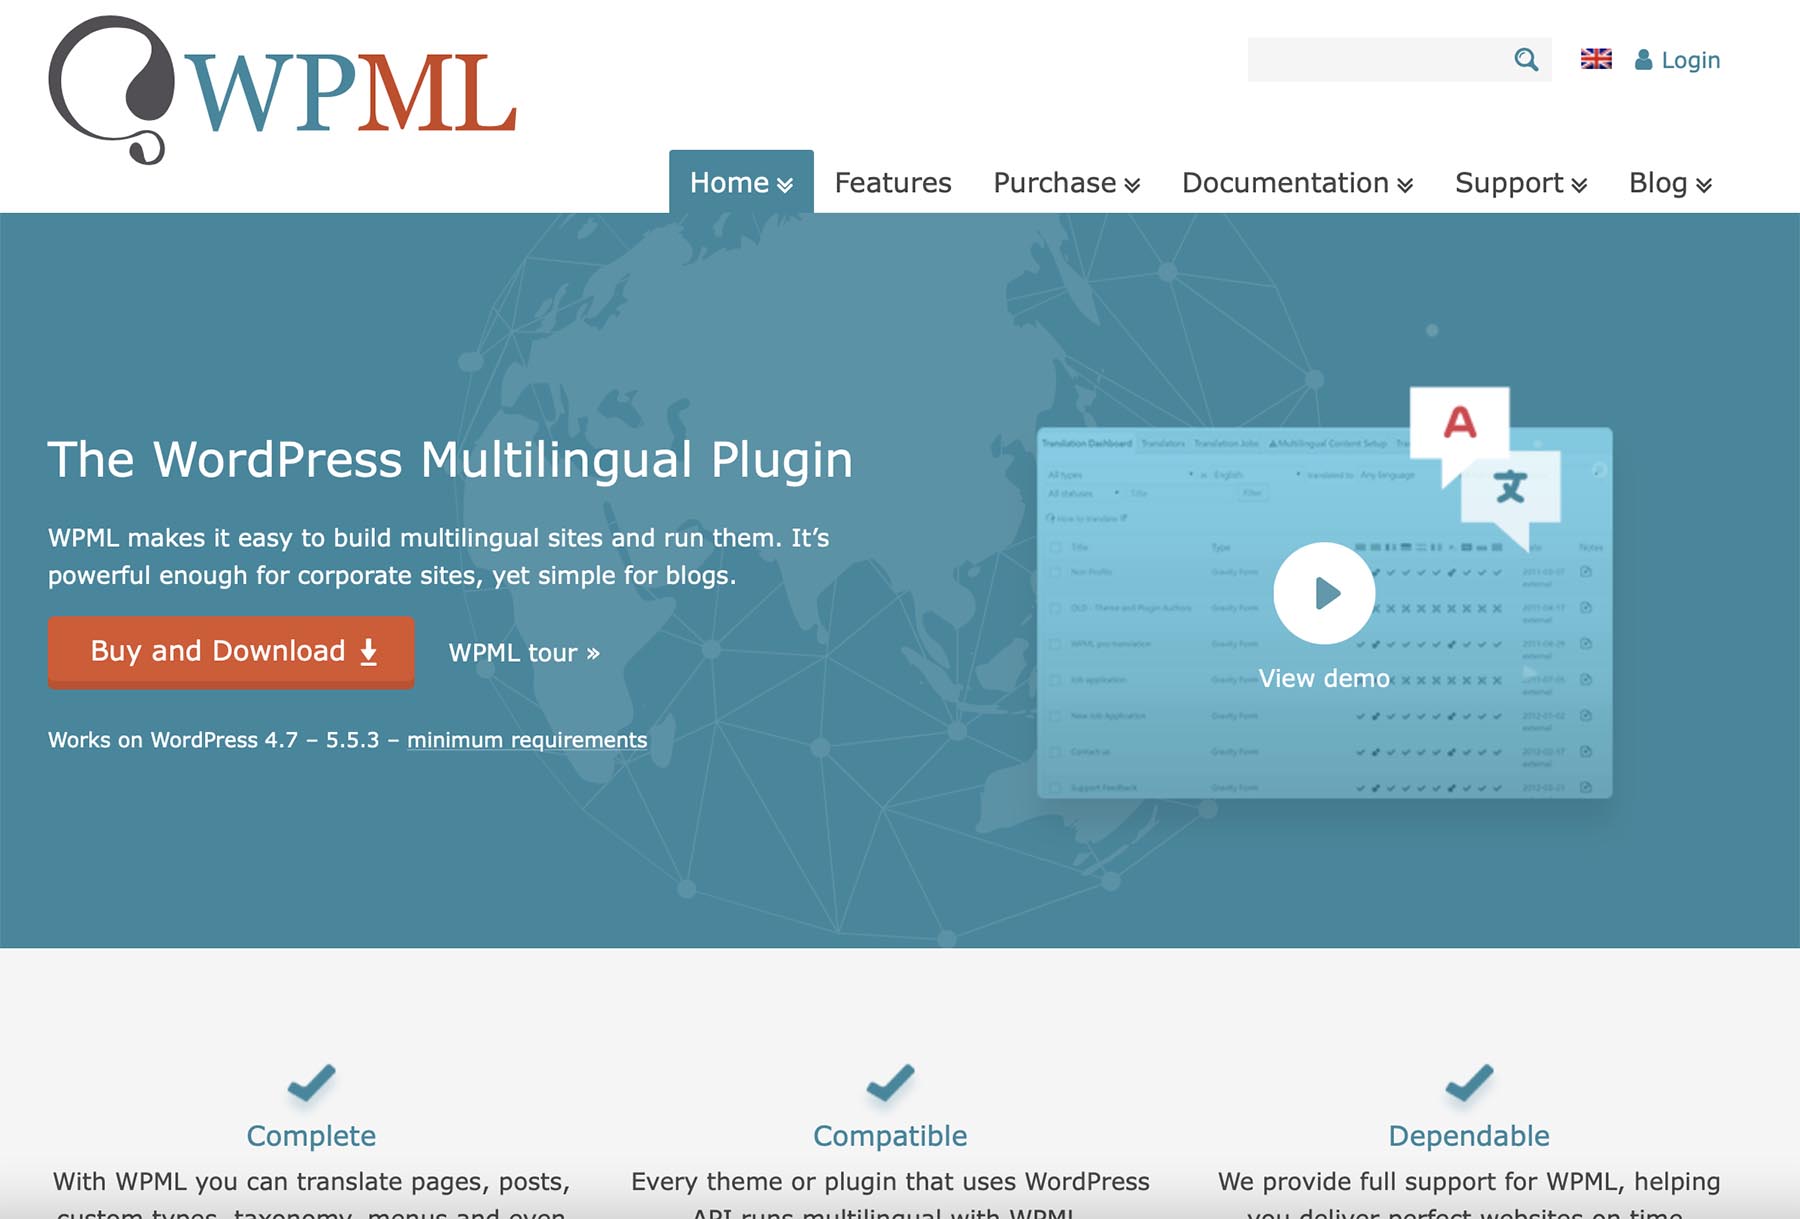 WPML Homepage